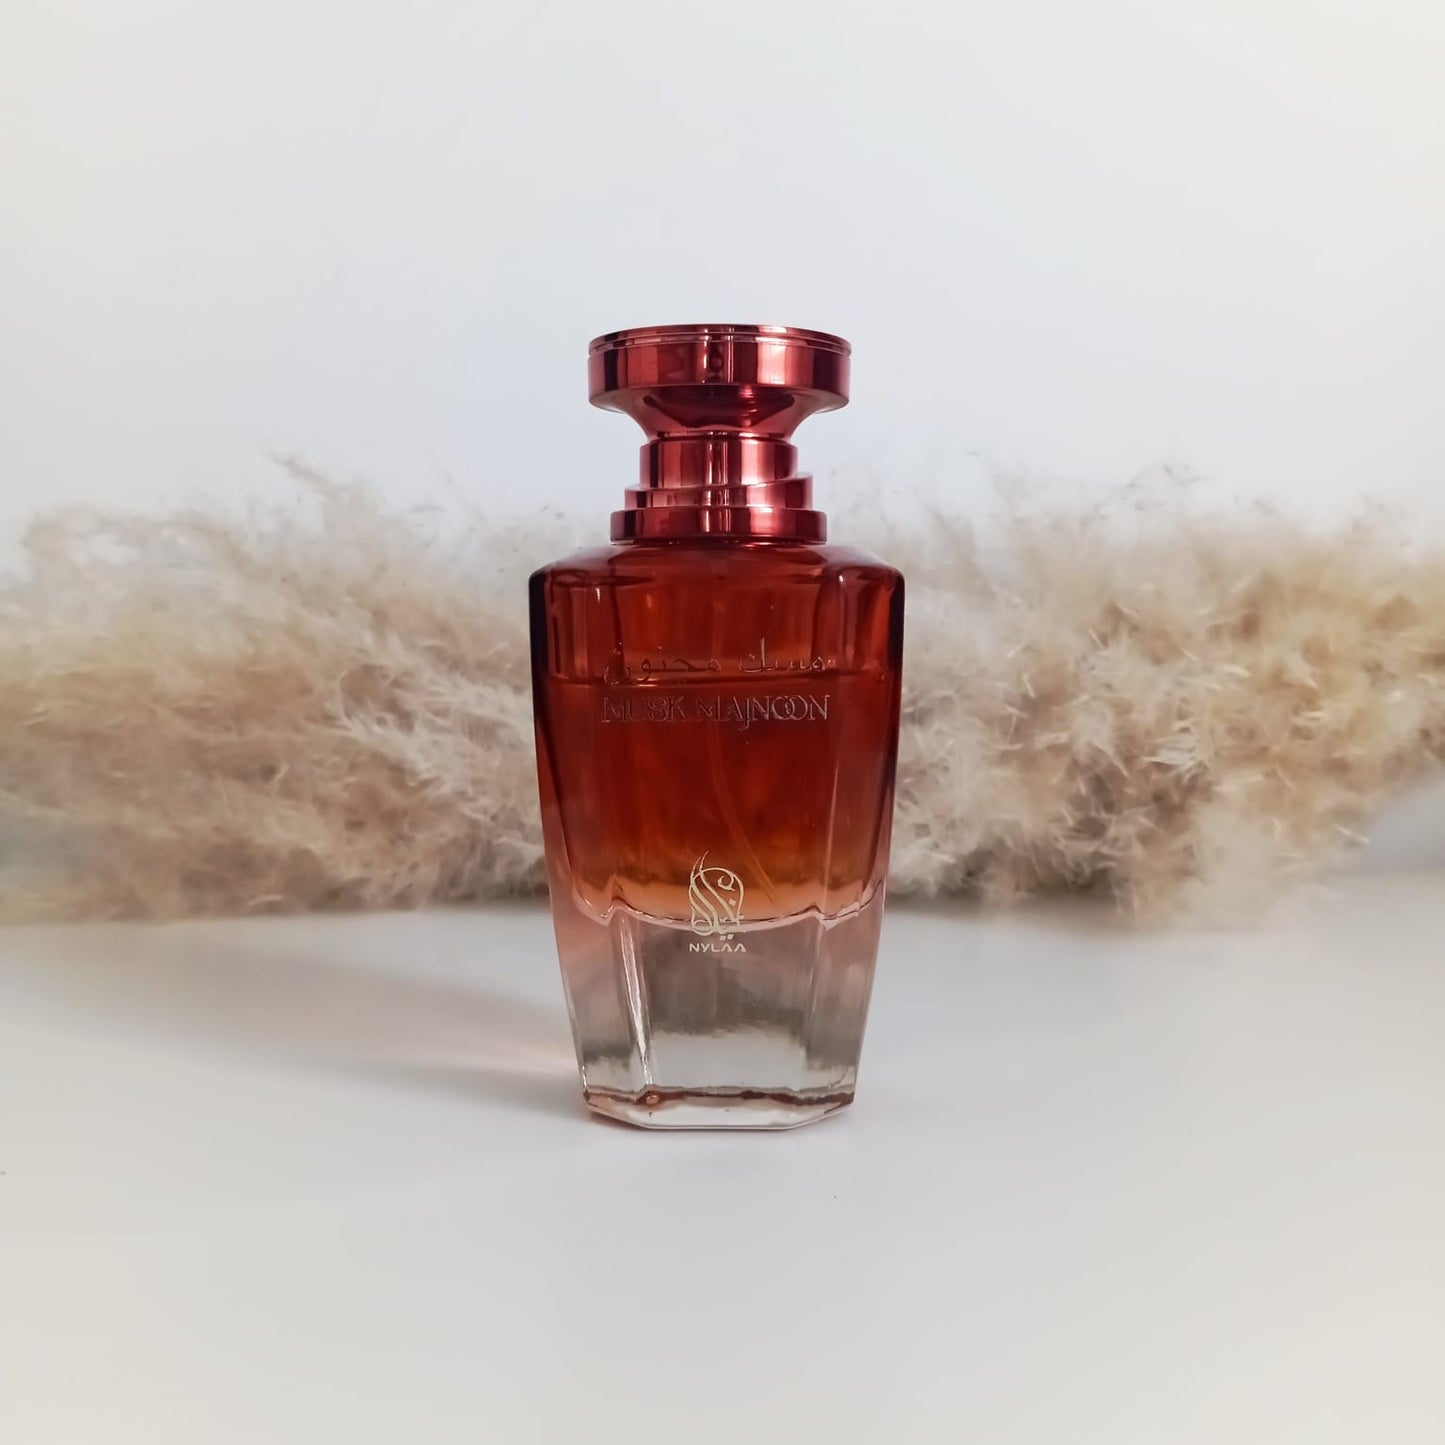 Parfum Musk Majnoon - Nylaa - 75ml